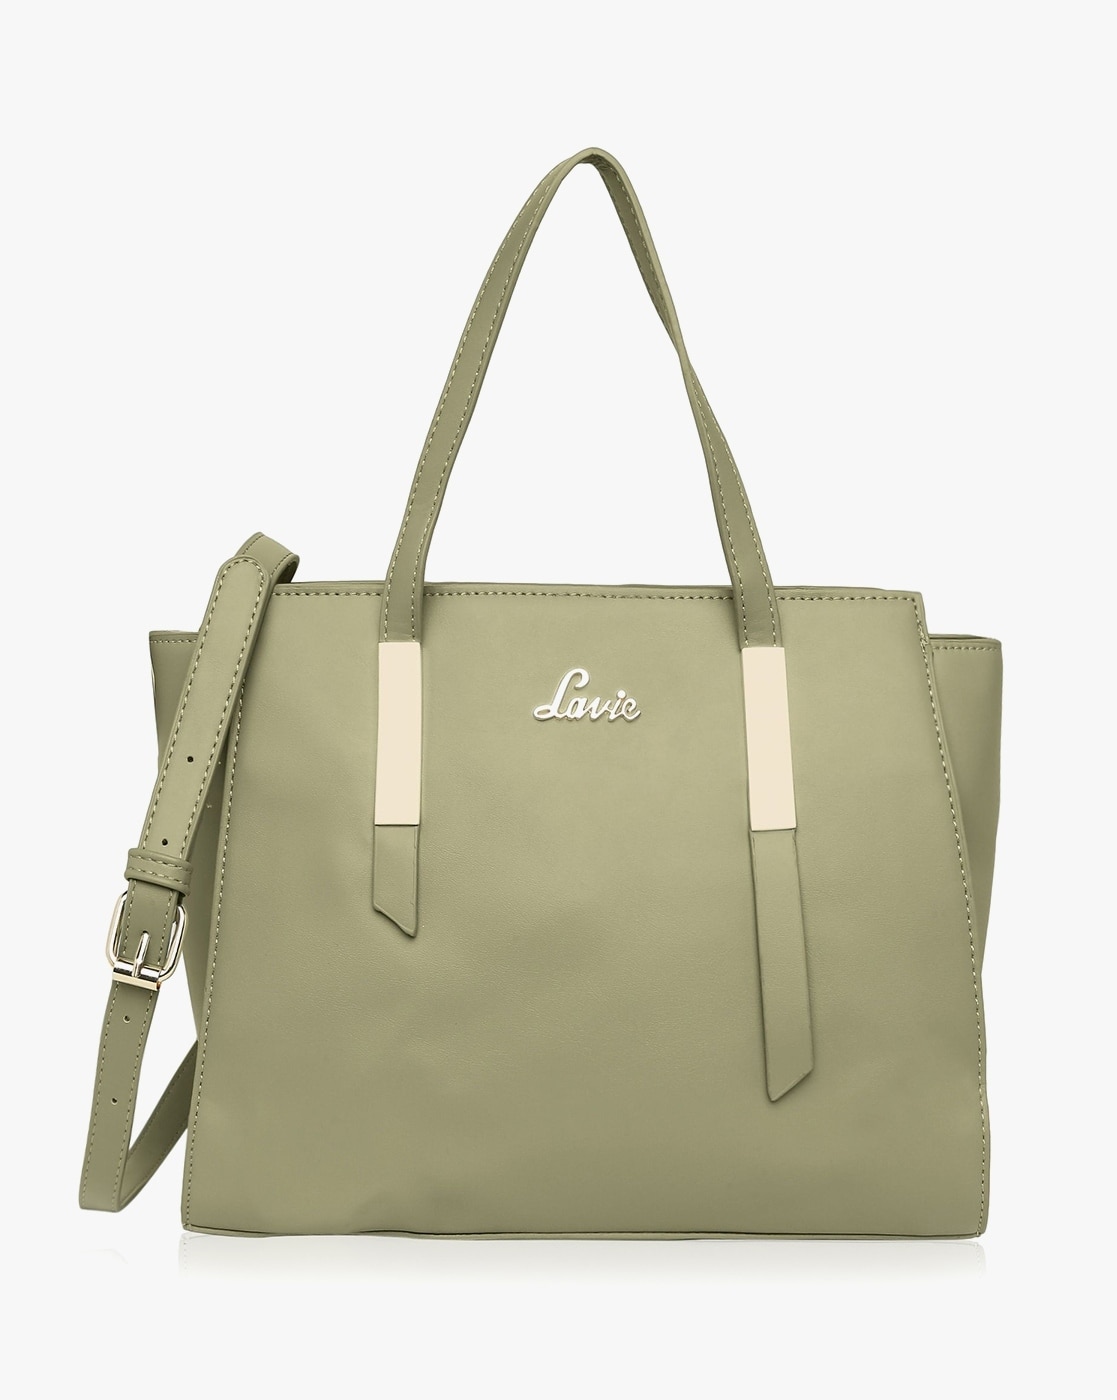 Branded Handbag Lavie @75%off // Amazon great India sale // My new Handbag  - YouTube